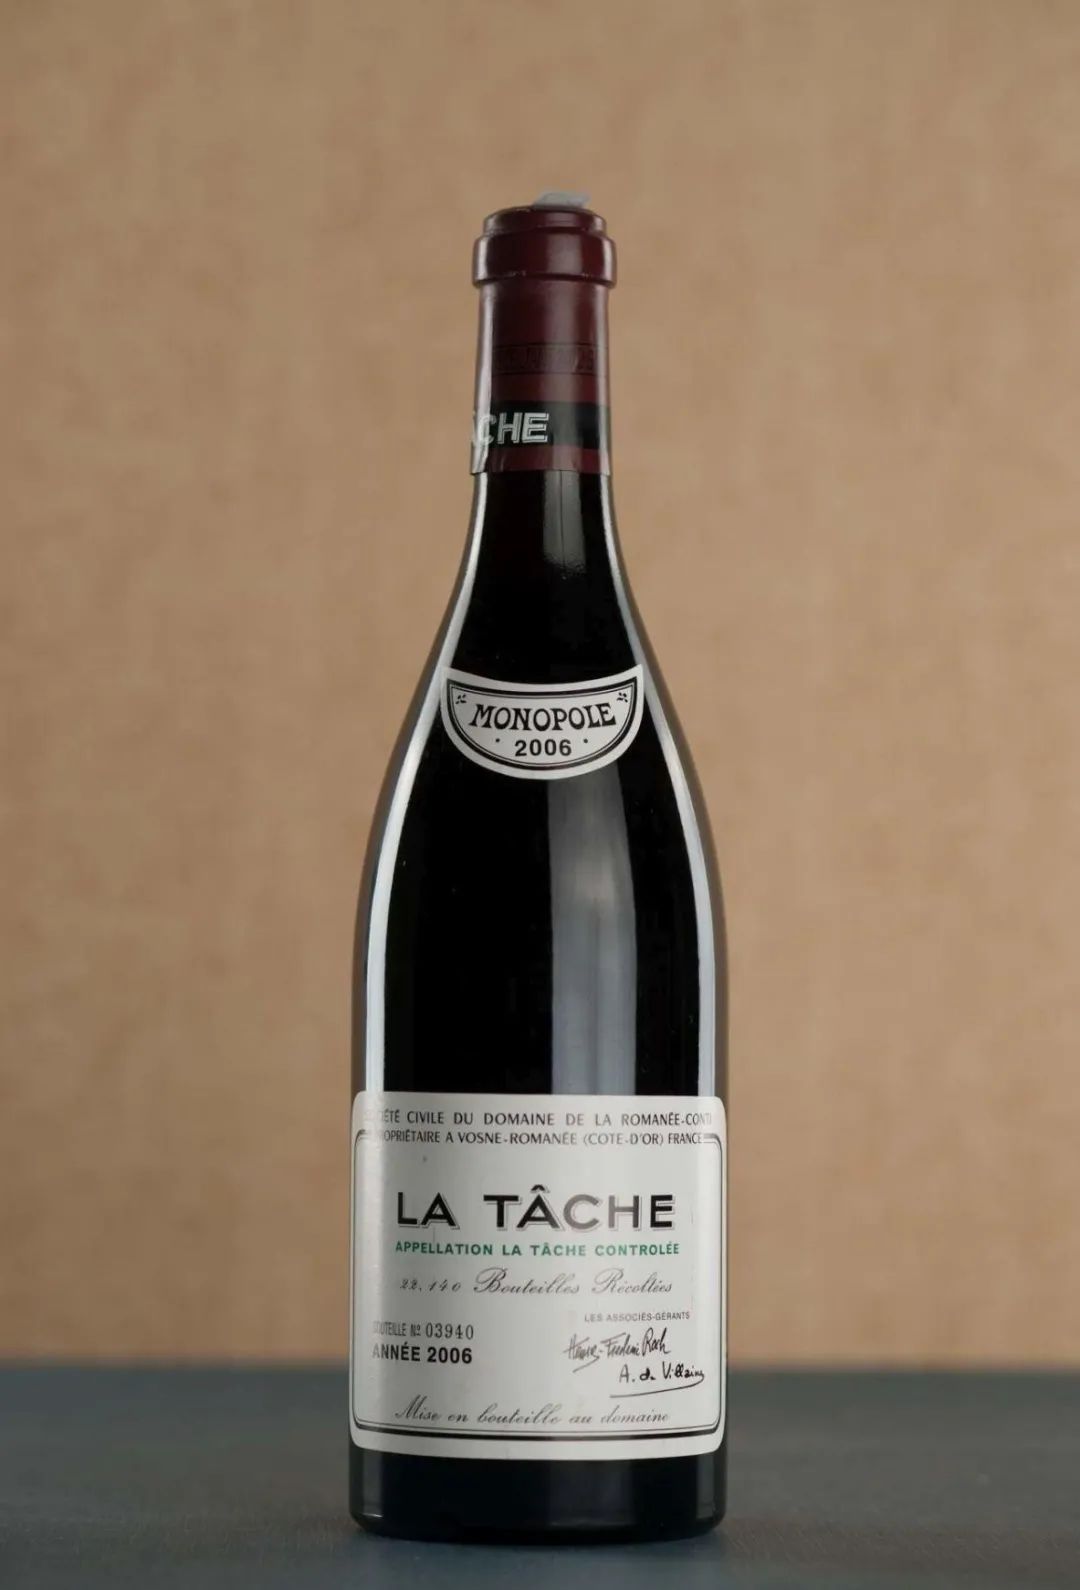 la t09che拉塔希平均年产量约为:5300瓶罗曼尼·康帝可以将黑皮诺